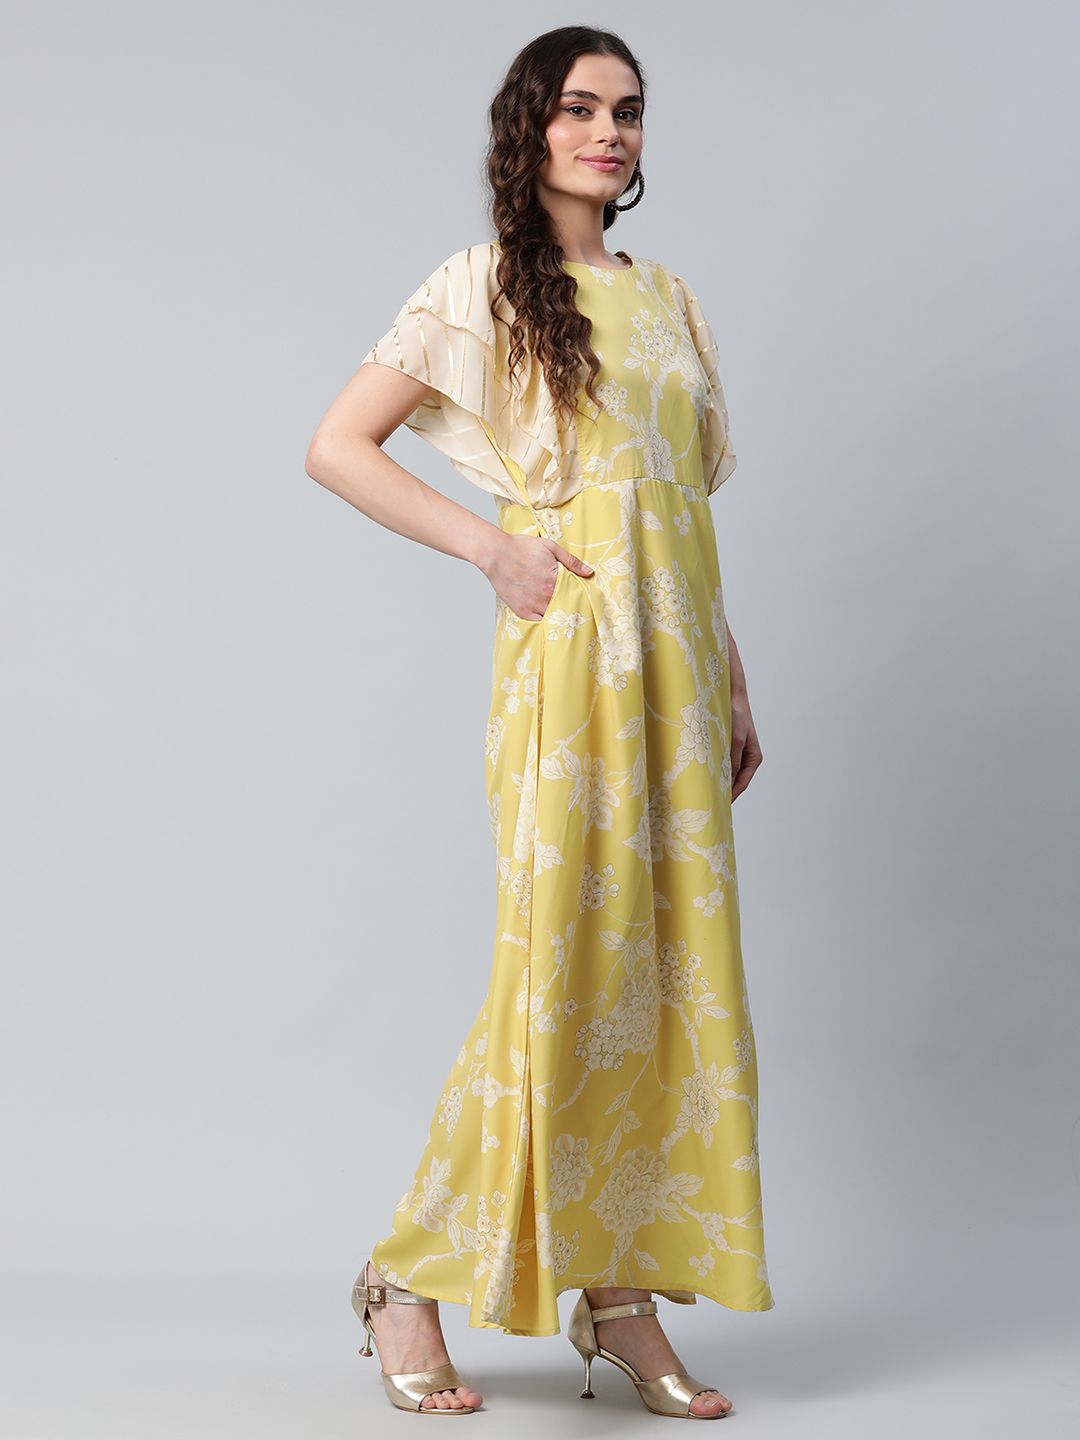 Lemon Yellow Crepe Floral Dress